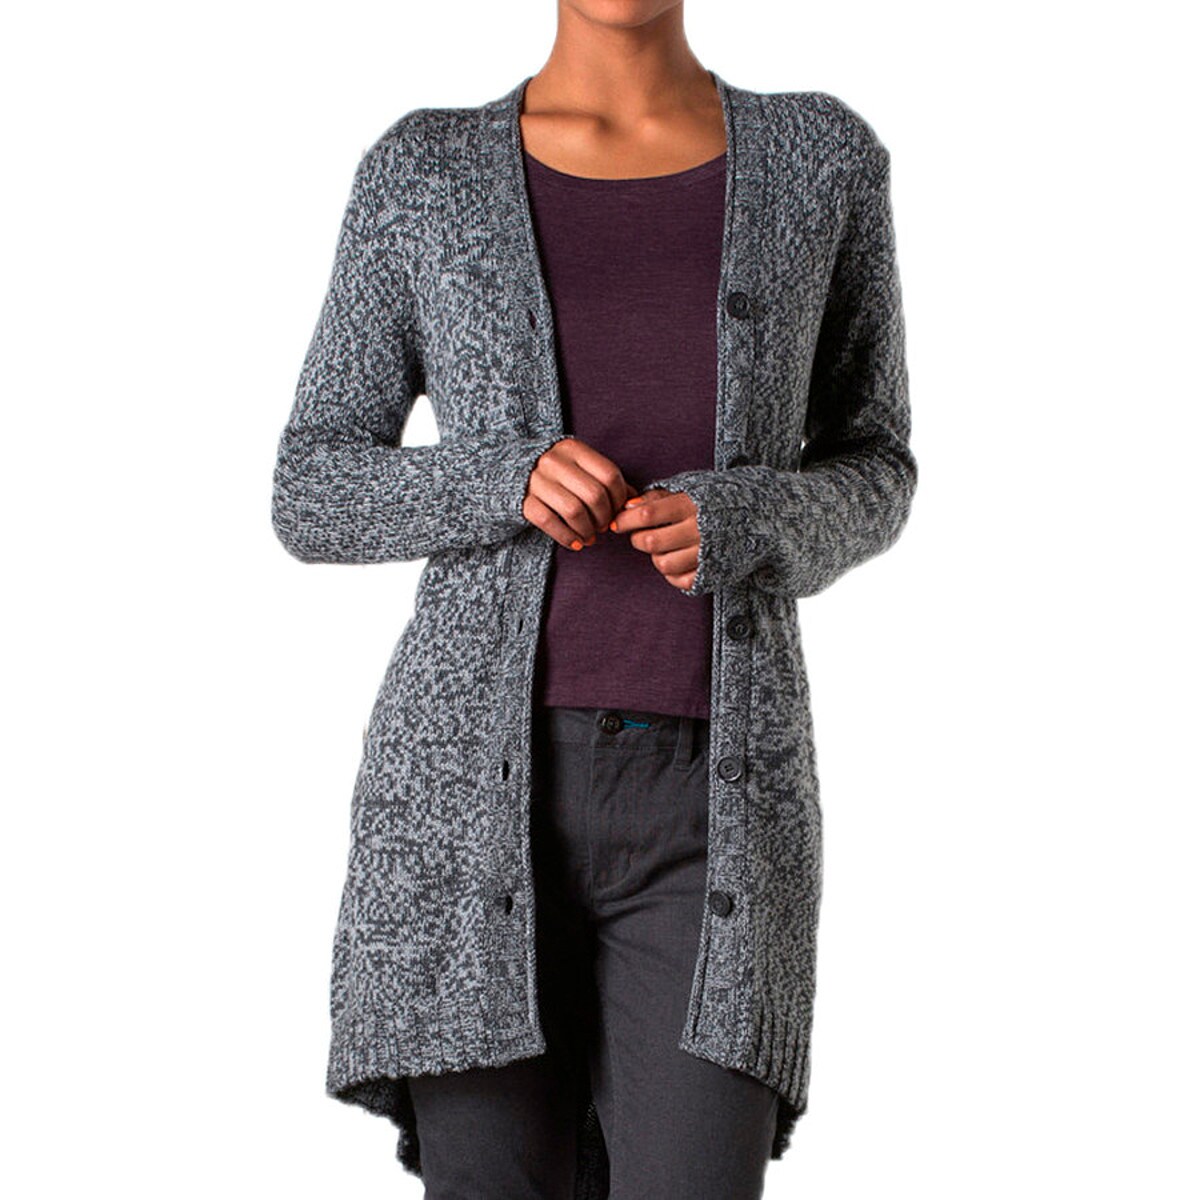 Toad & Co. Marlevelous Long Cardigan Sweater - Women's | eBay